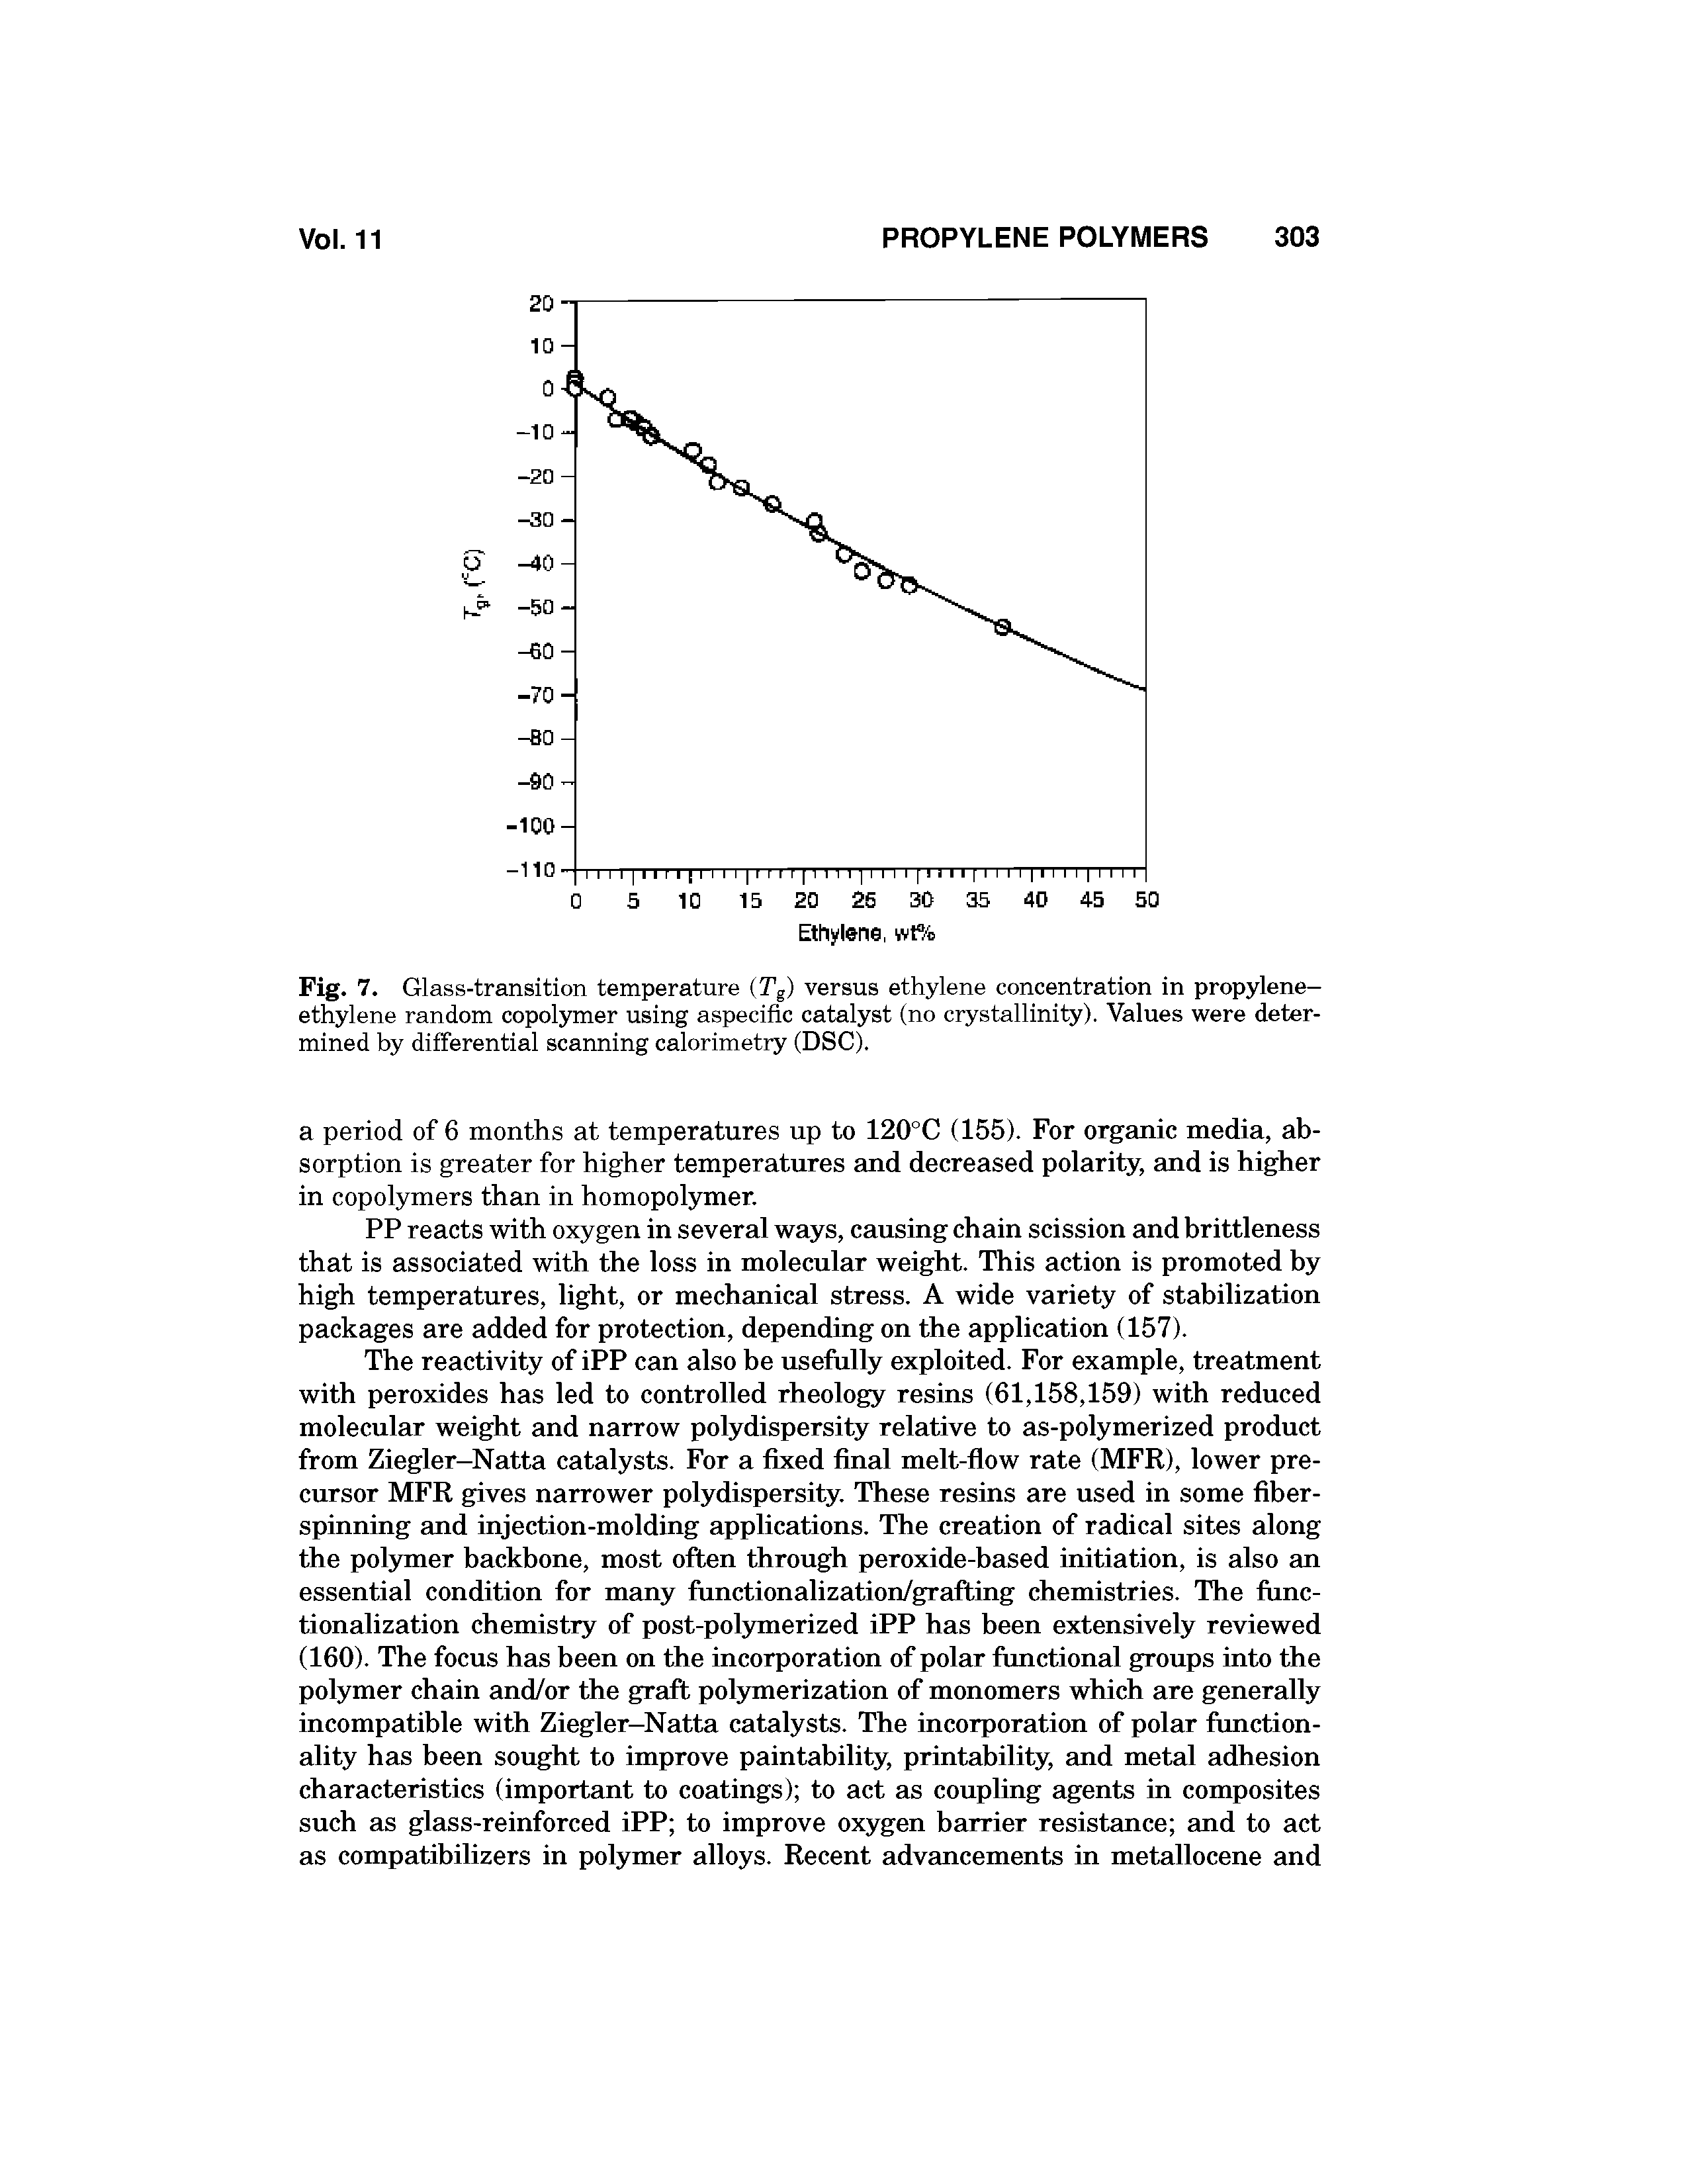 Fig. 7. Glass-transition temperature (Tg) versus ethylene concentration in propylene-ethylene random copolsmier using aspeciflc catalyst (no crystallinity). Values were determined by differential scanning calorimetiy (DSC).